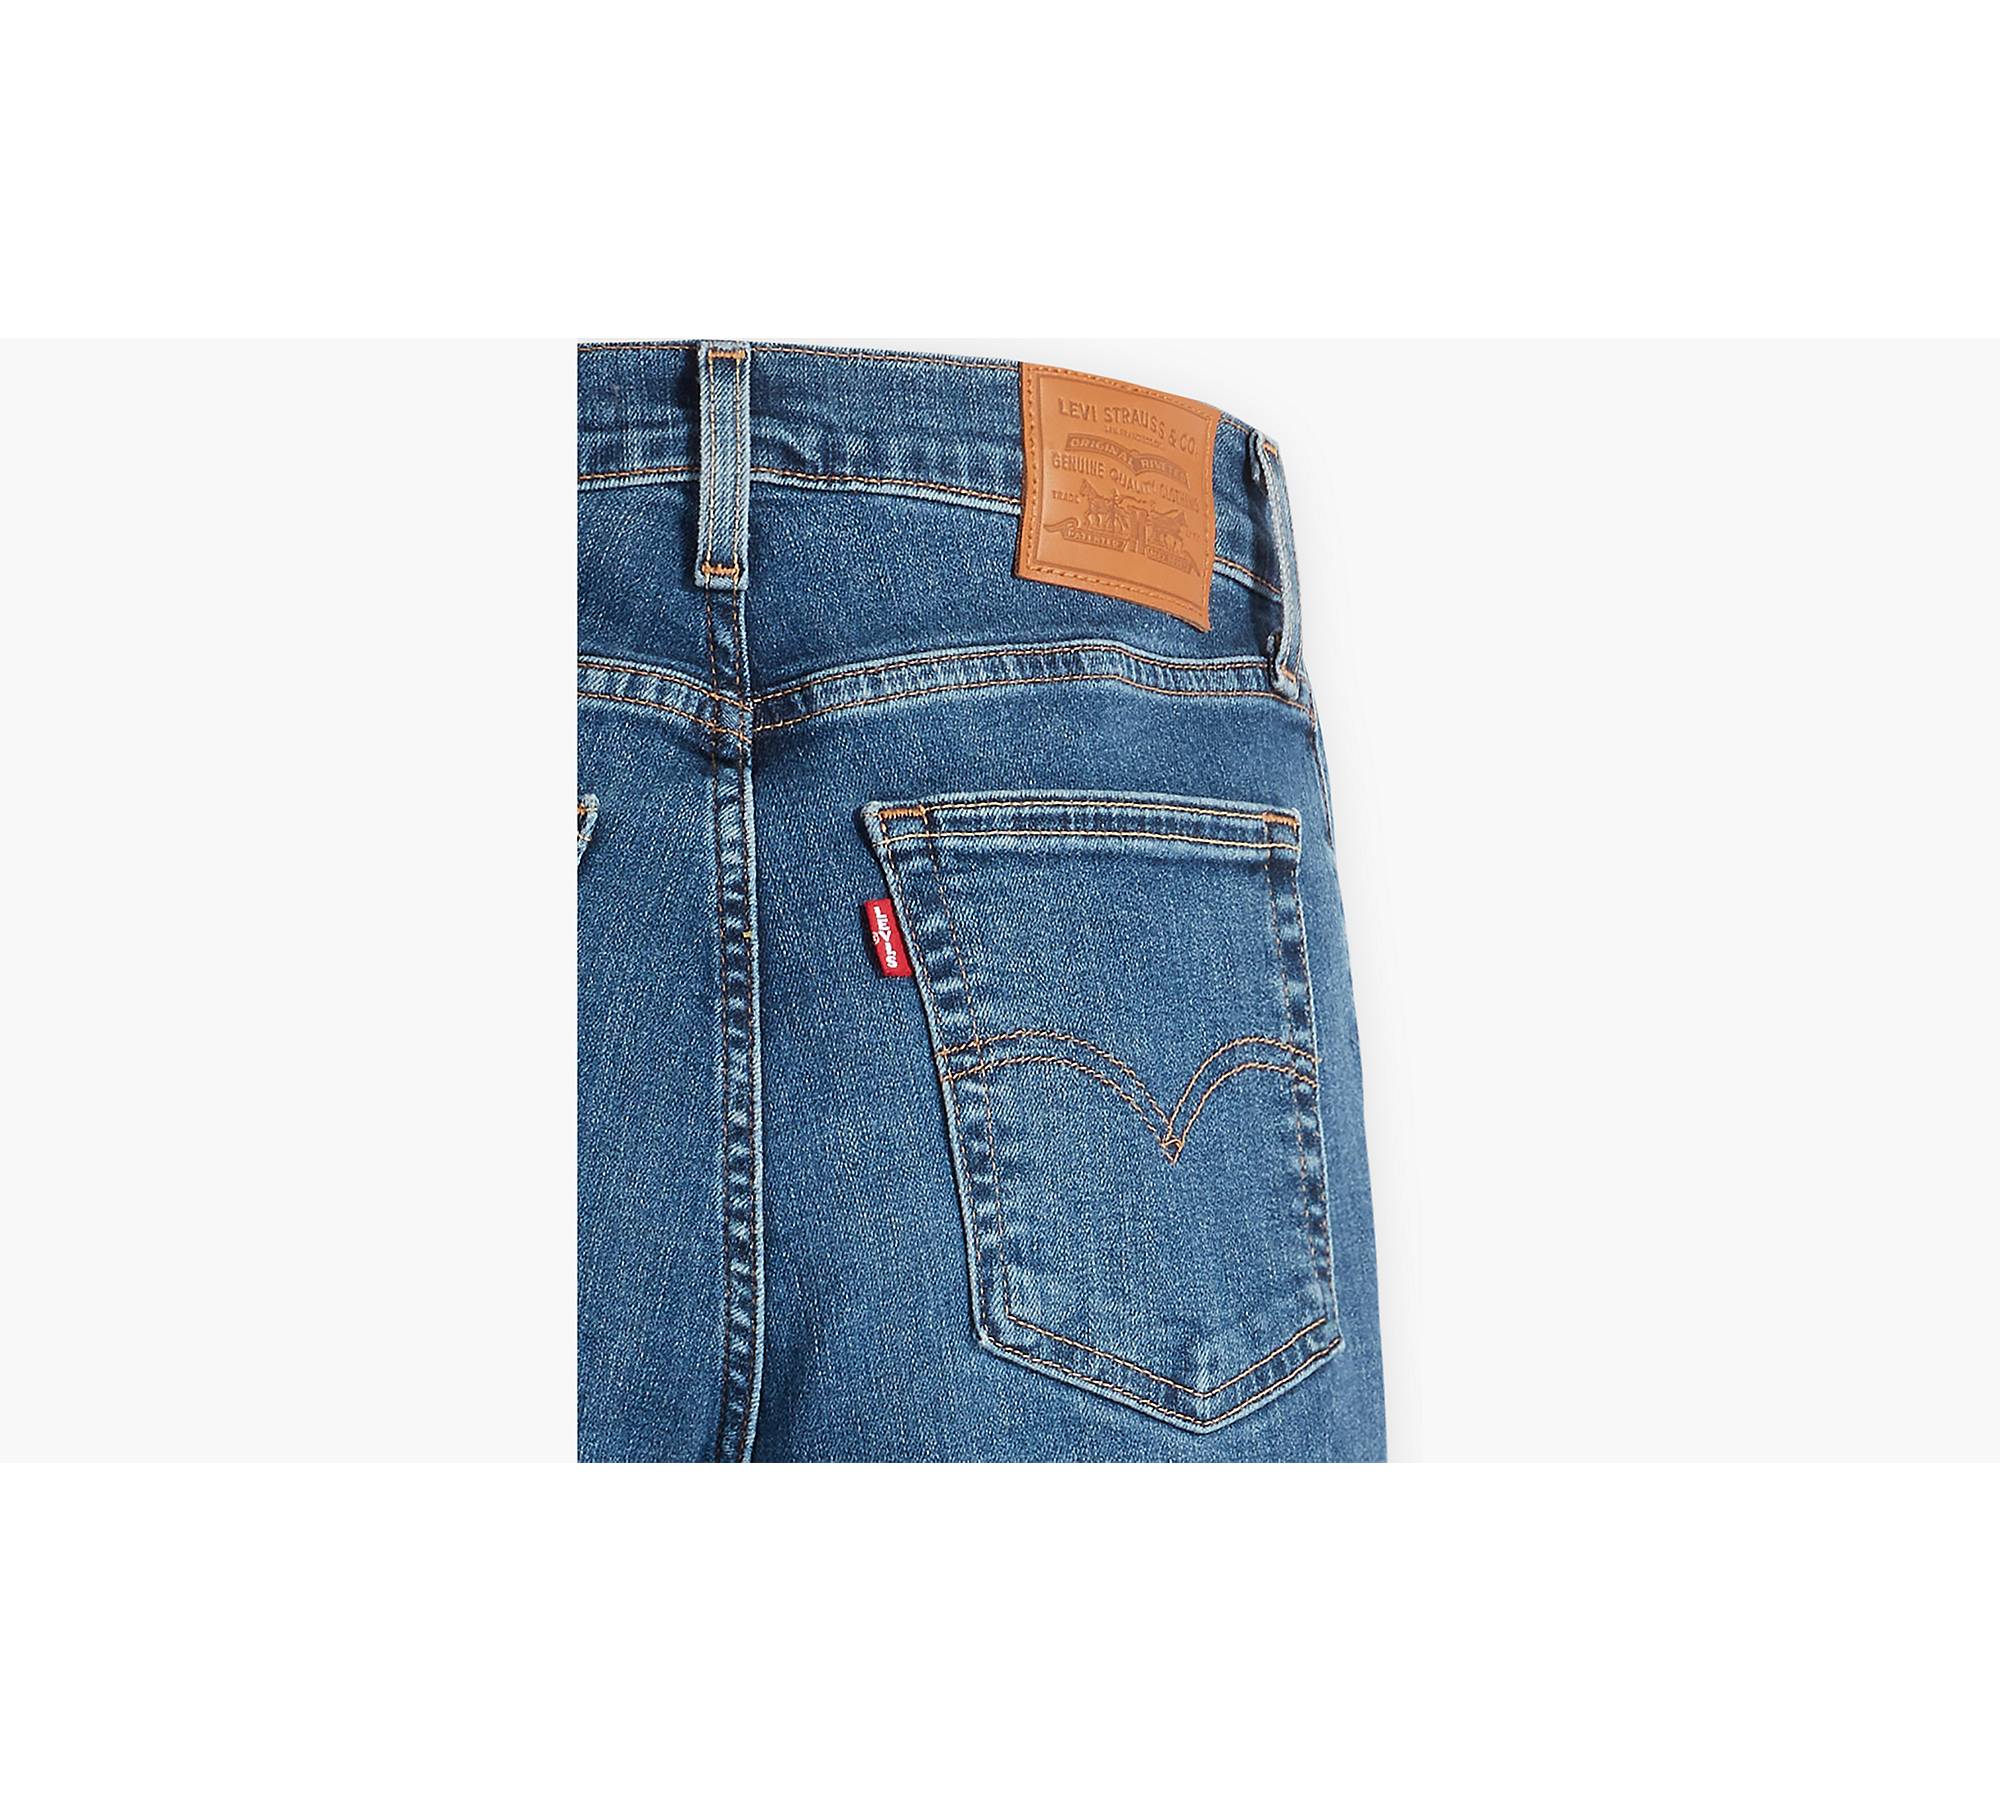 Buy Women Blue Slim Fit Mid Wash Jeans Online - 768254